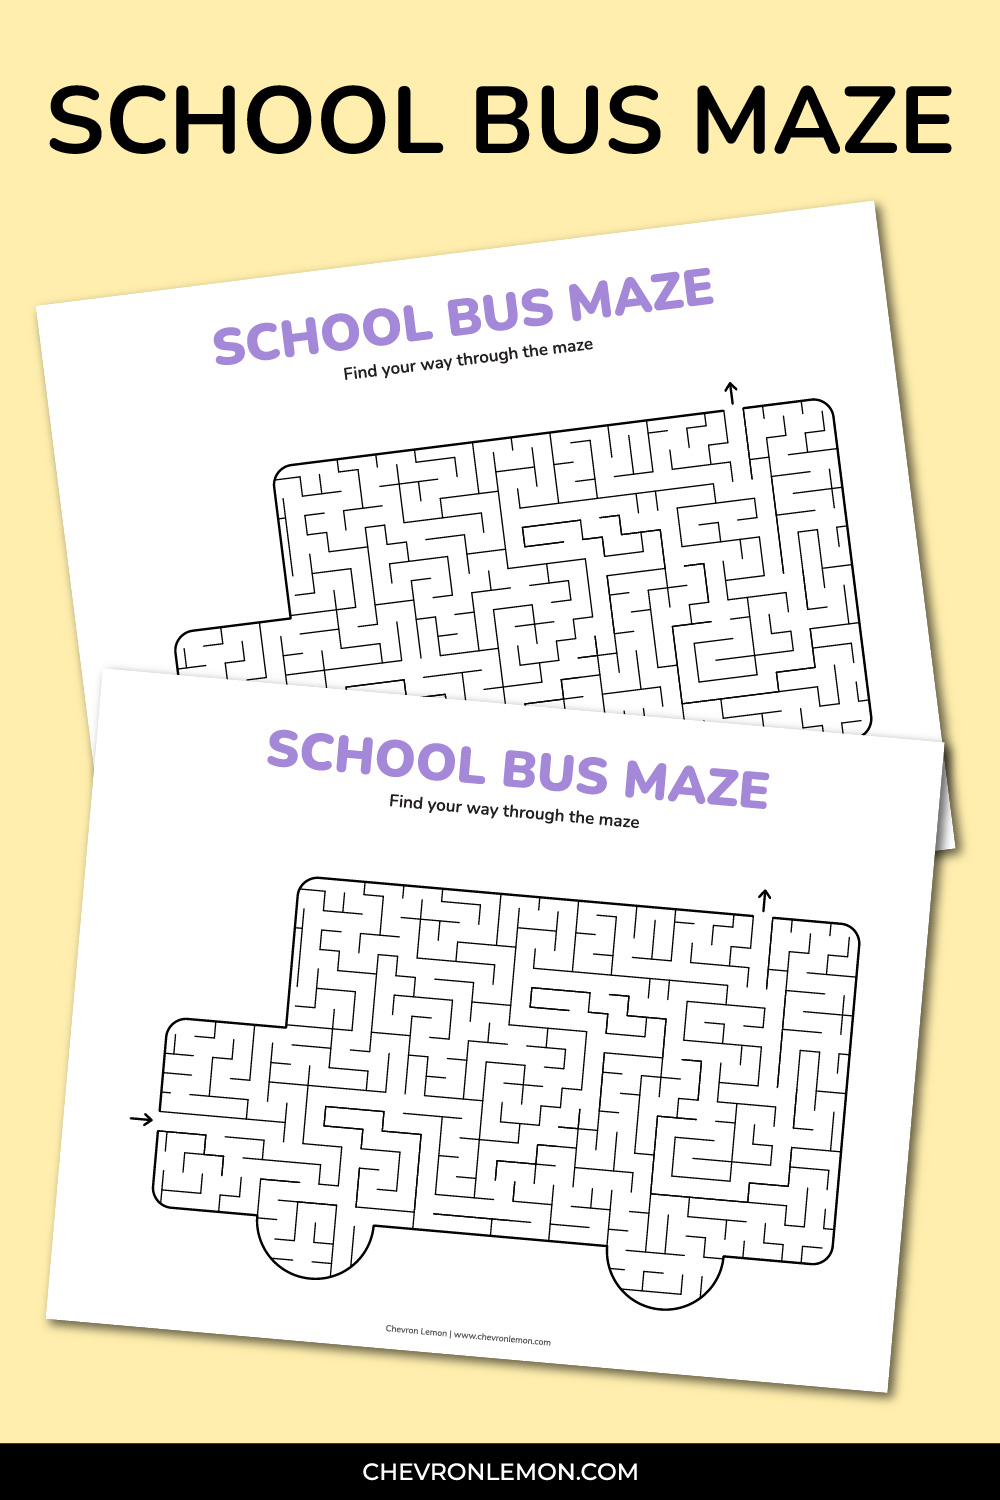 School bus maze